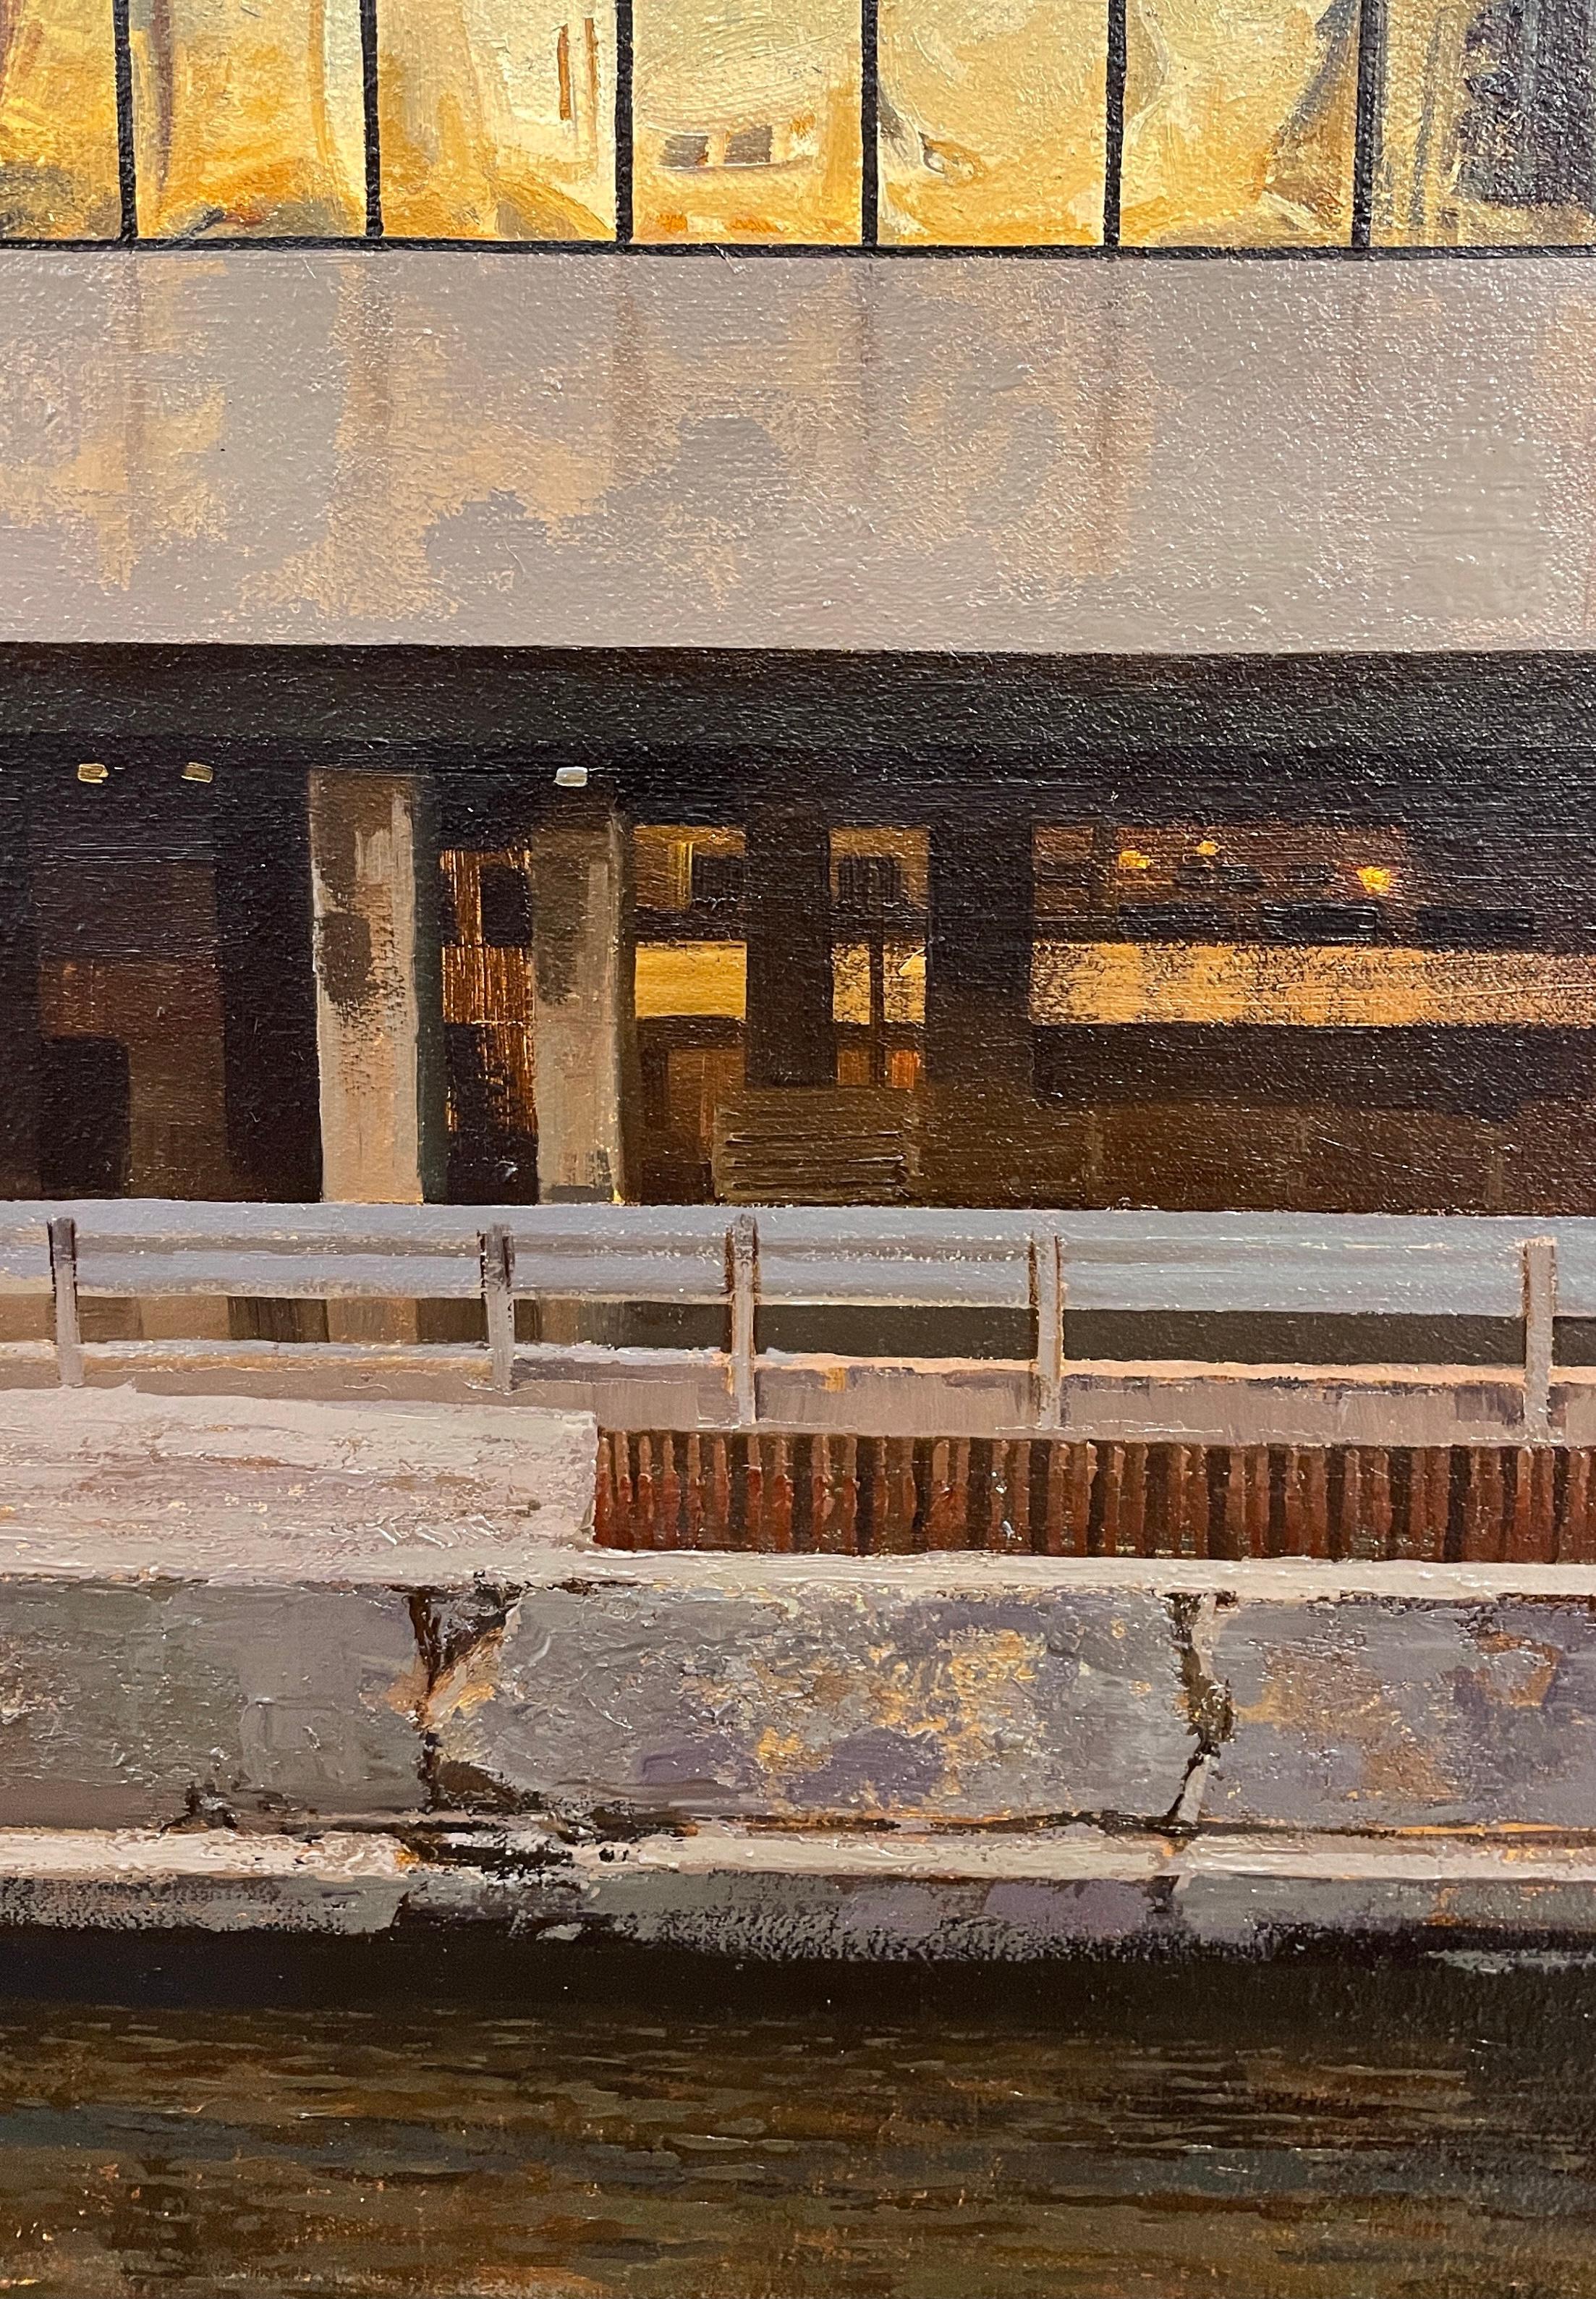 Deconstruction- Chicago Loop Architecture Reflecting on Building, Oil on Linen - Brown Landscape Painting by Enrique Santana